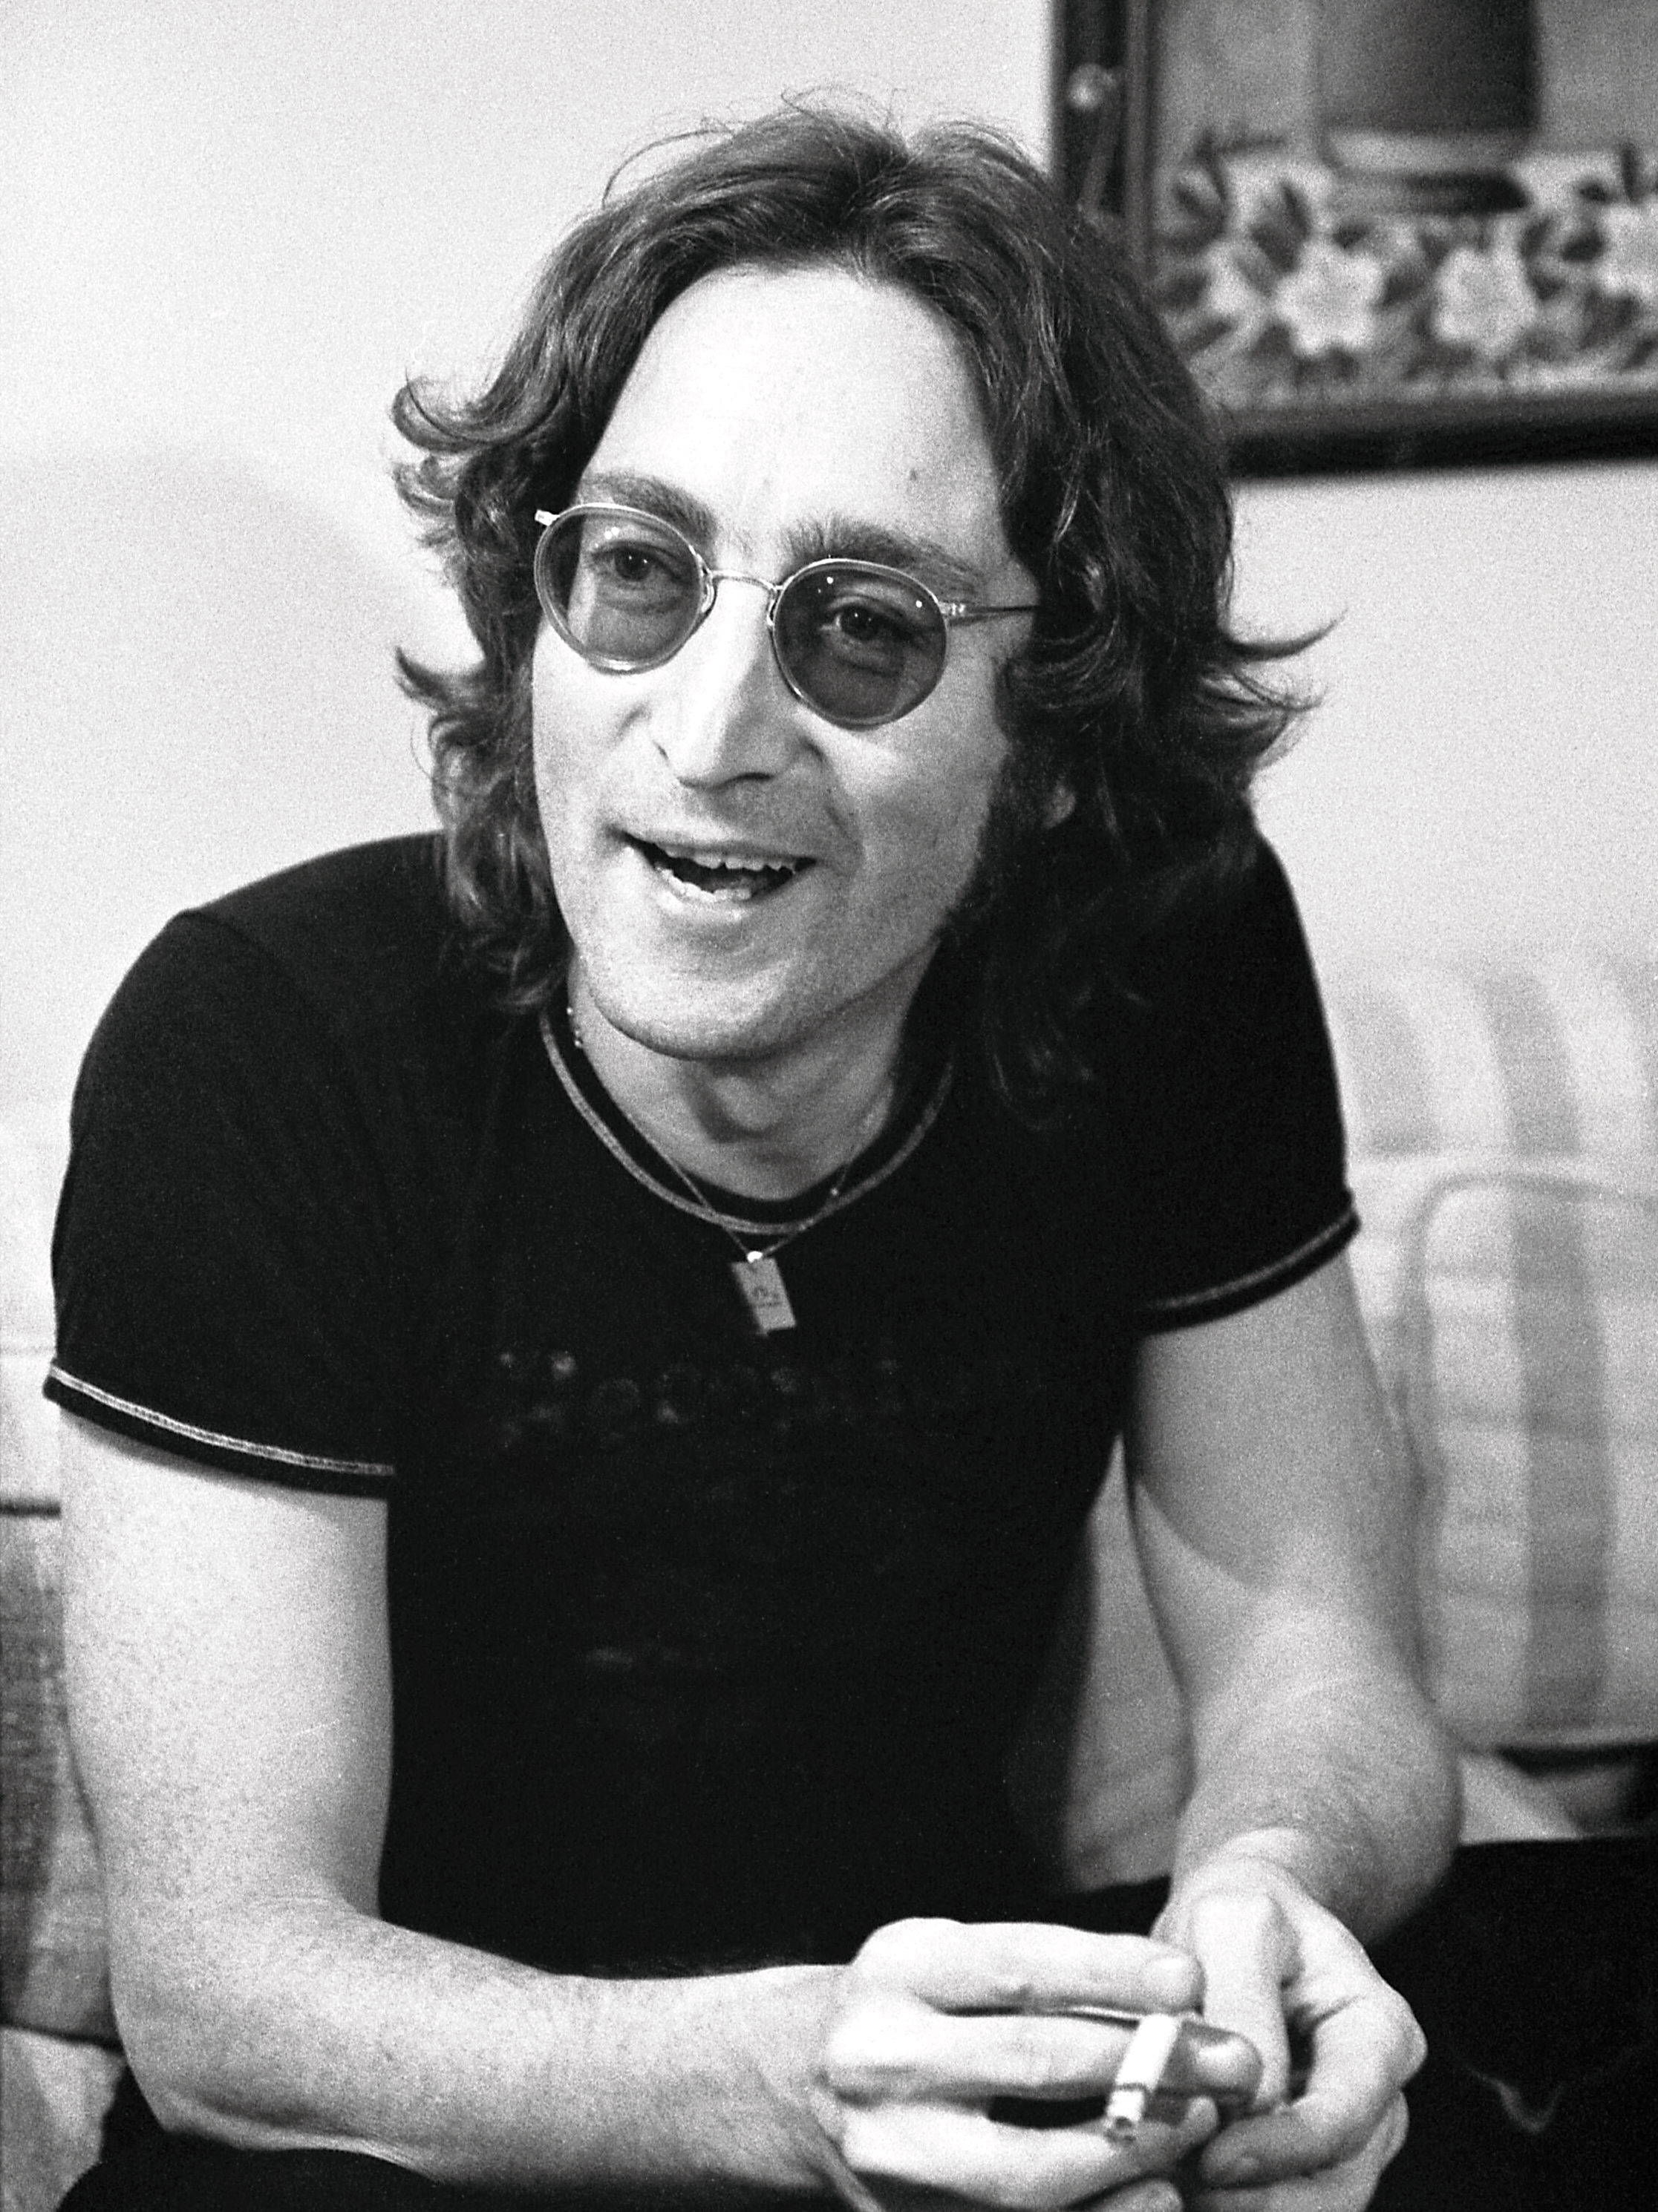 John Lennon - Wikipedia